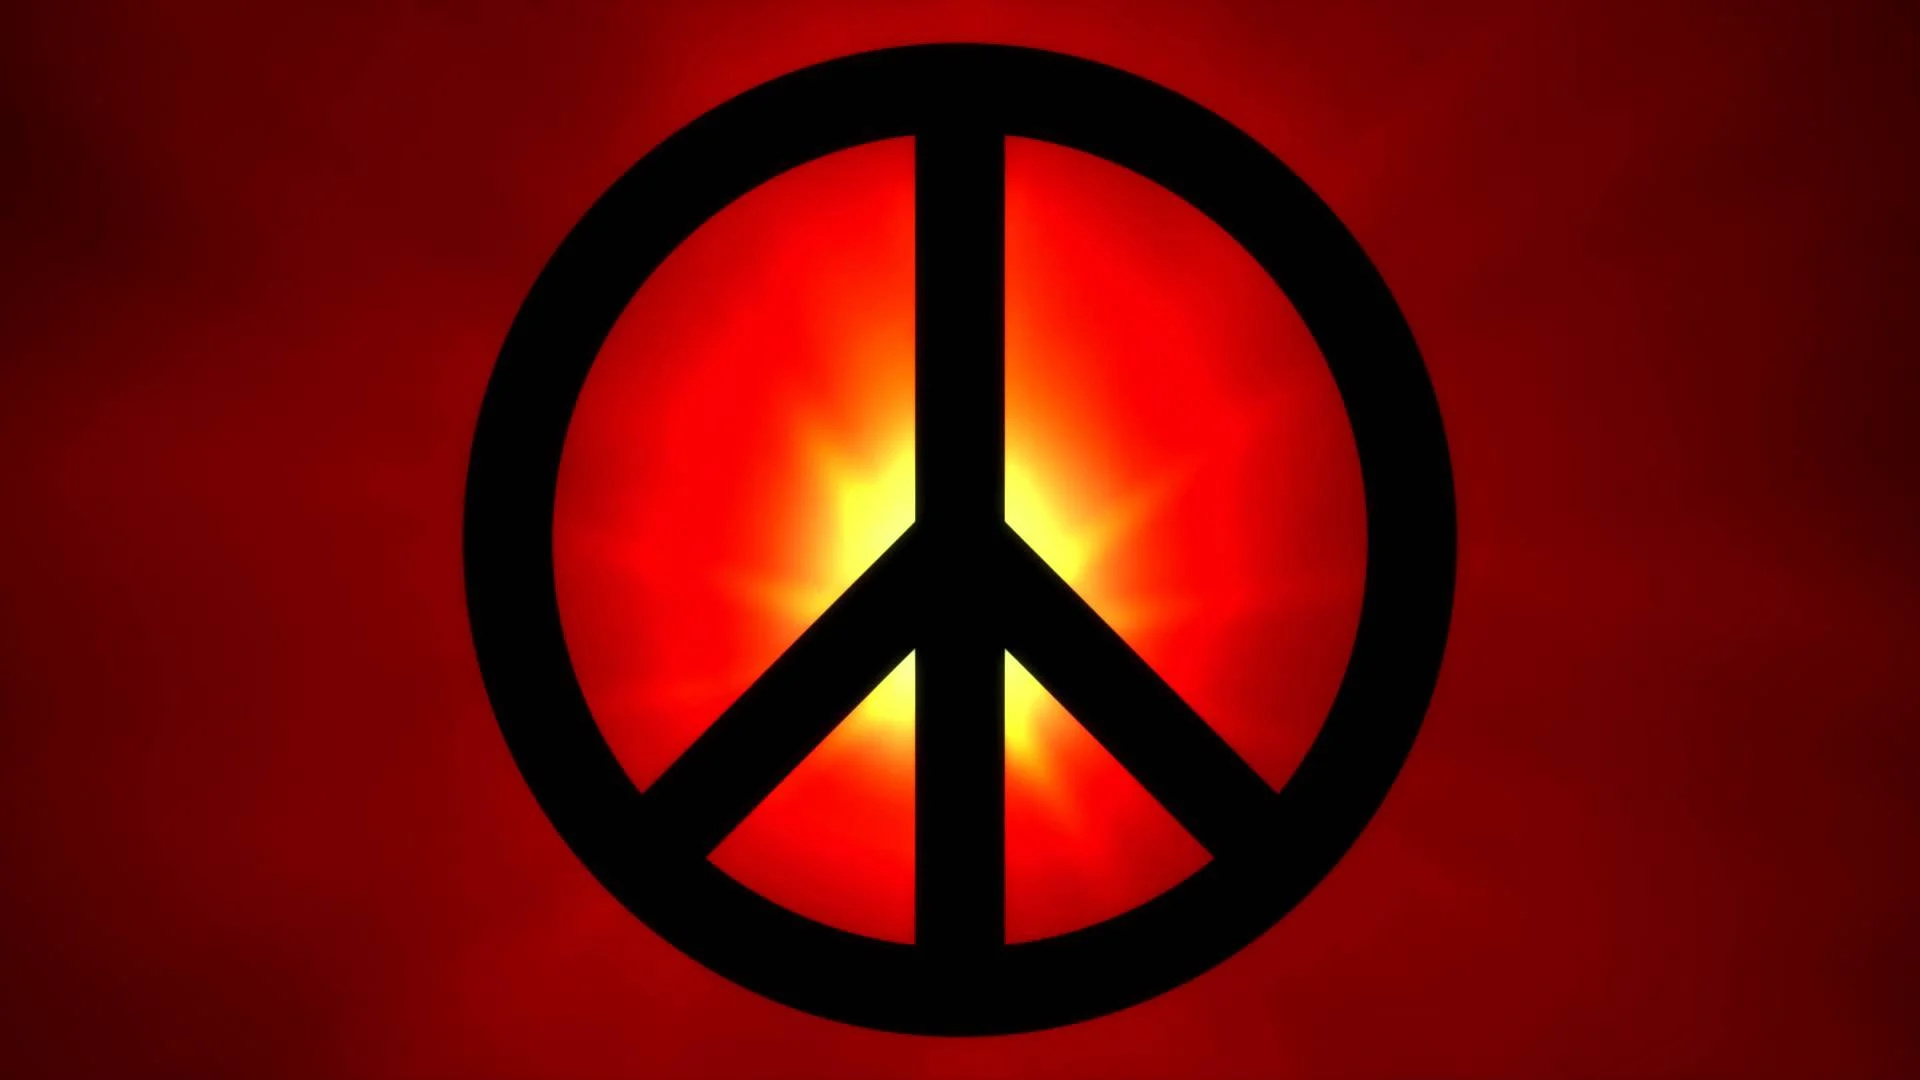 Peace sign, Free download, Peace symbol, Dove, 1920x1080 Full HD Desktop